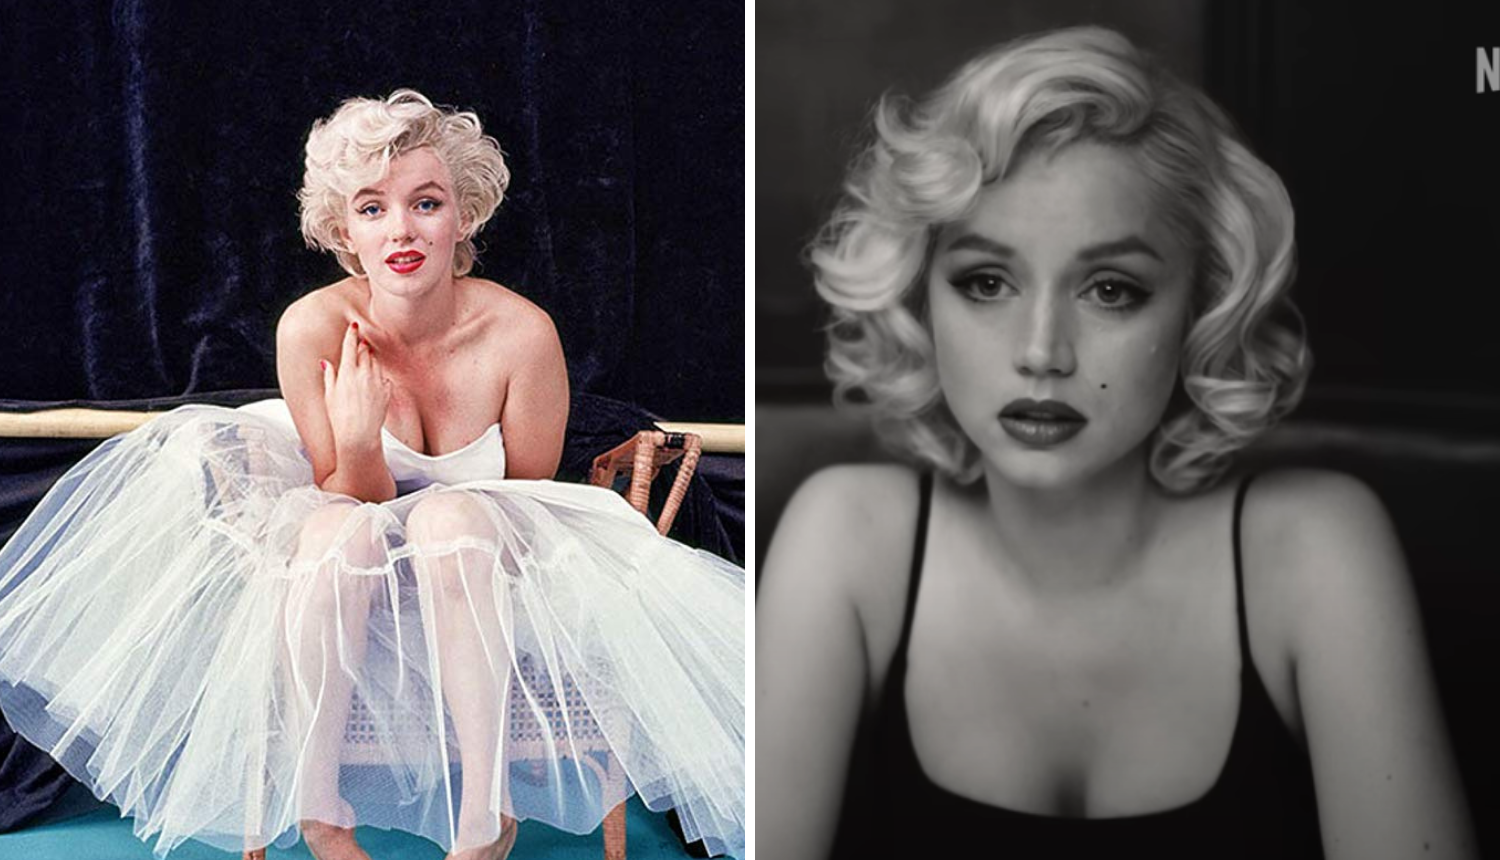 Kakva sličnost! Pogledajte kako se seksi Kubanka transformirala u legendarnu Marilyn Monroe